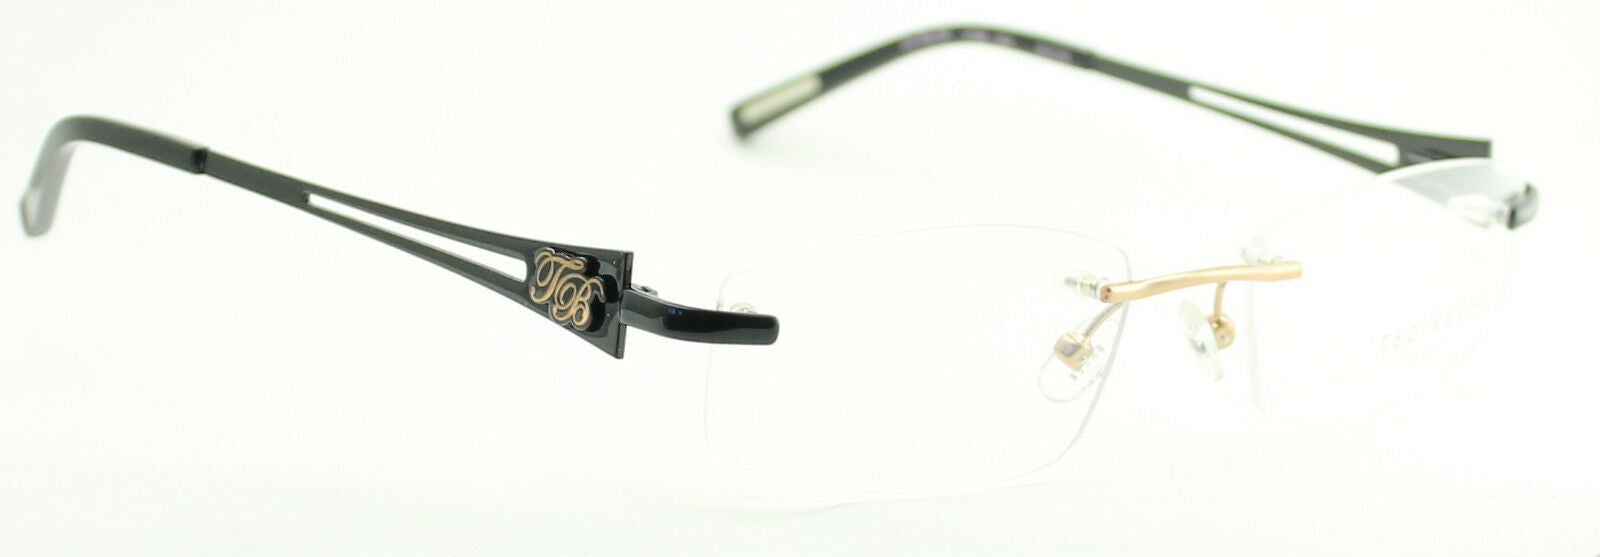 TED BAKER DO REI MI 2198 004 Eyewear FRAMES Glasses Eyeglasses RX Optical - BNIB